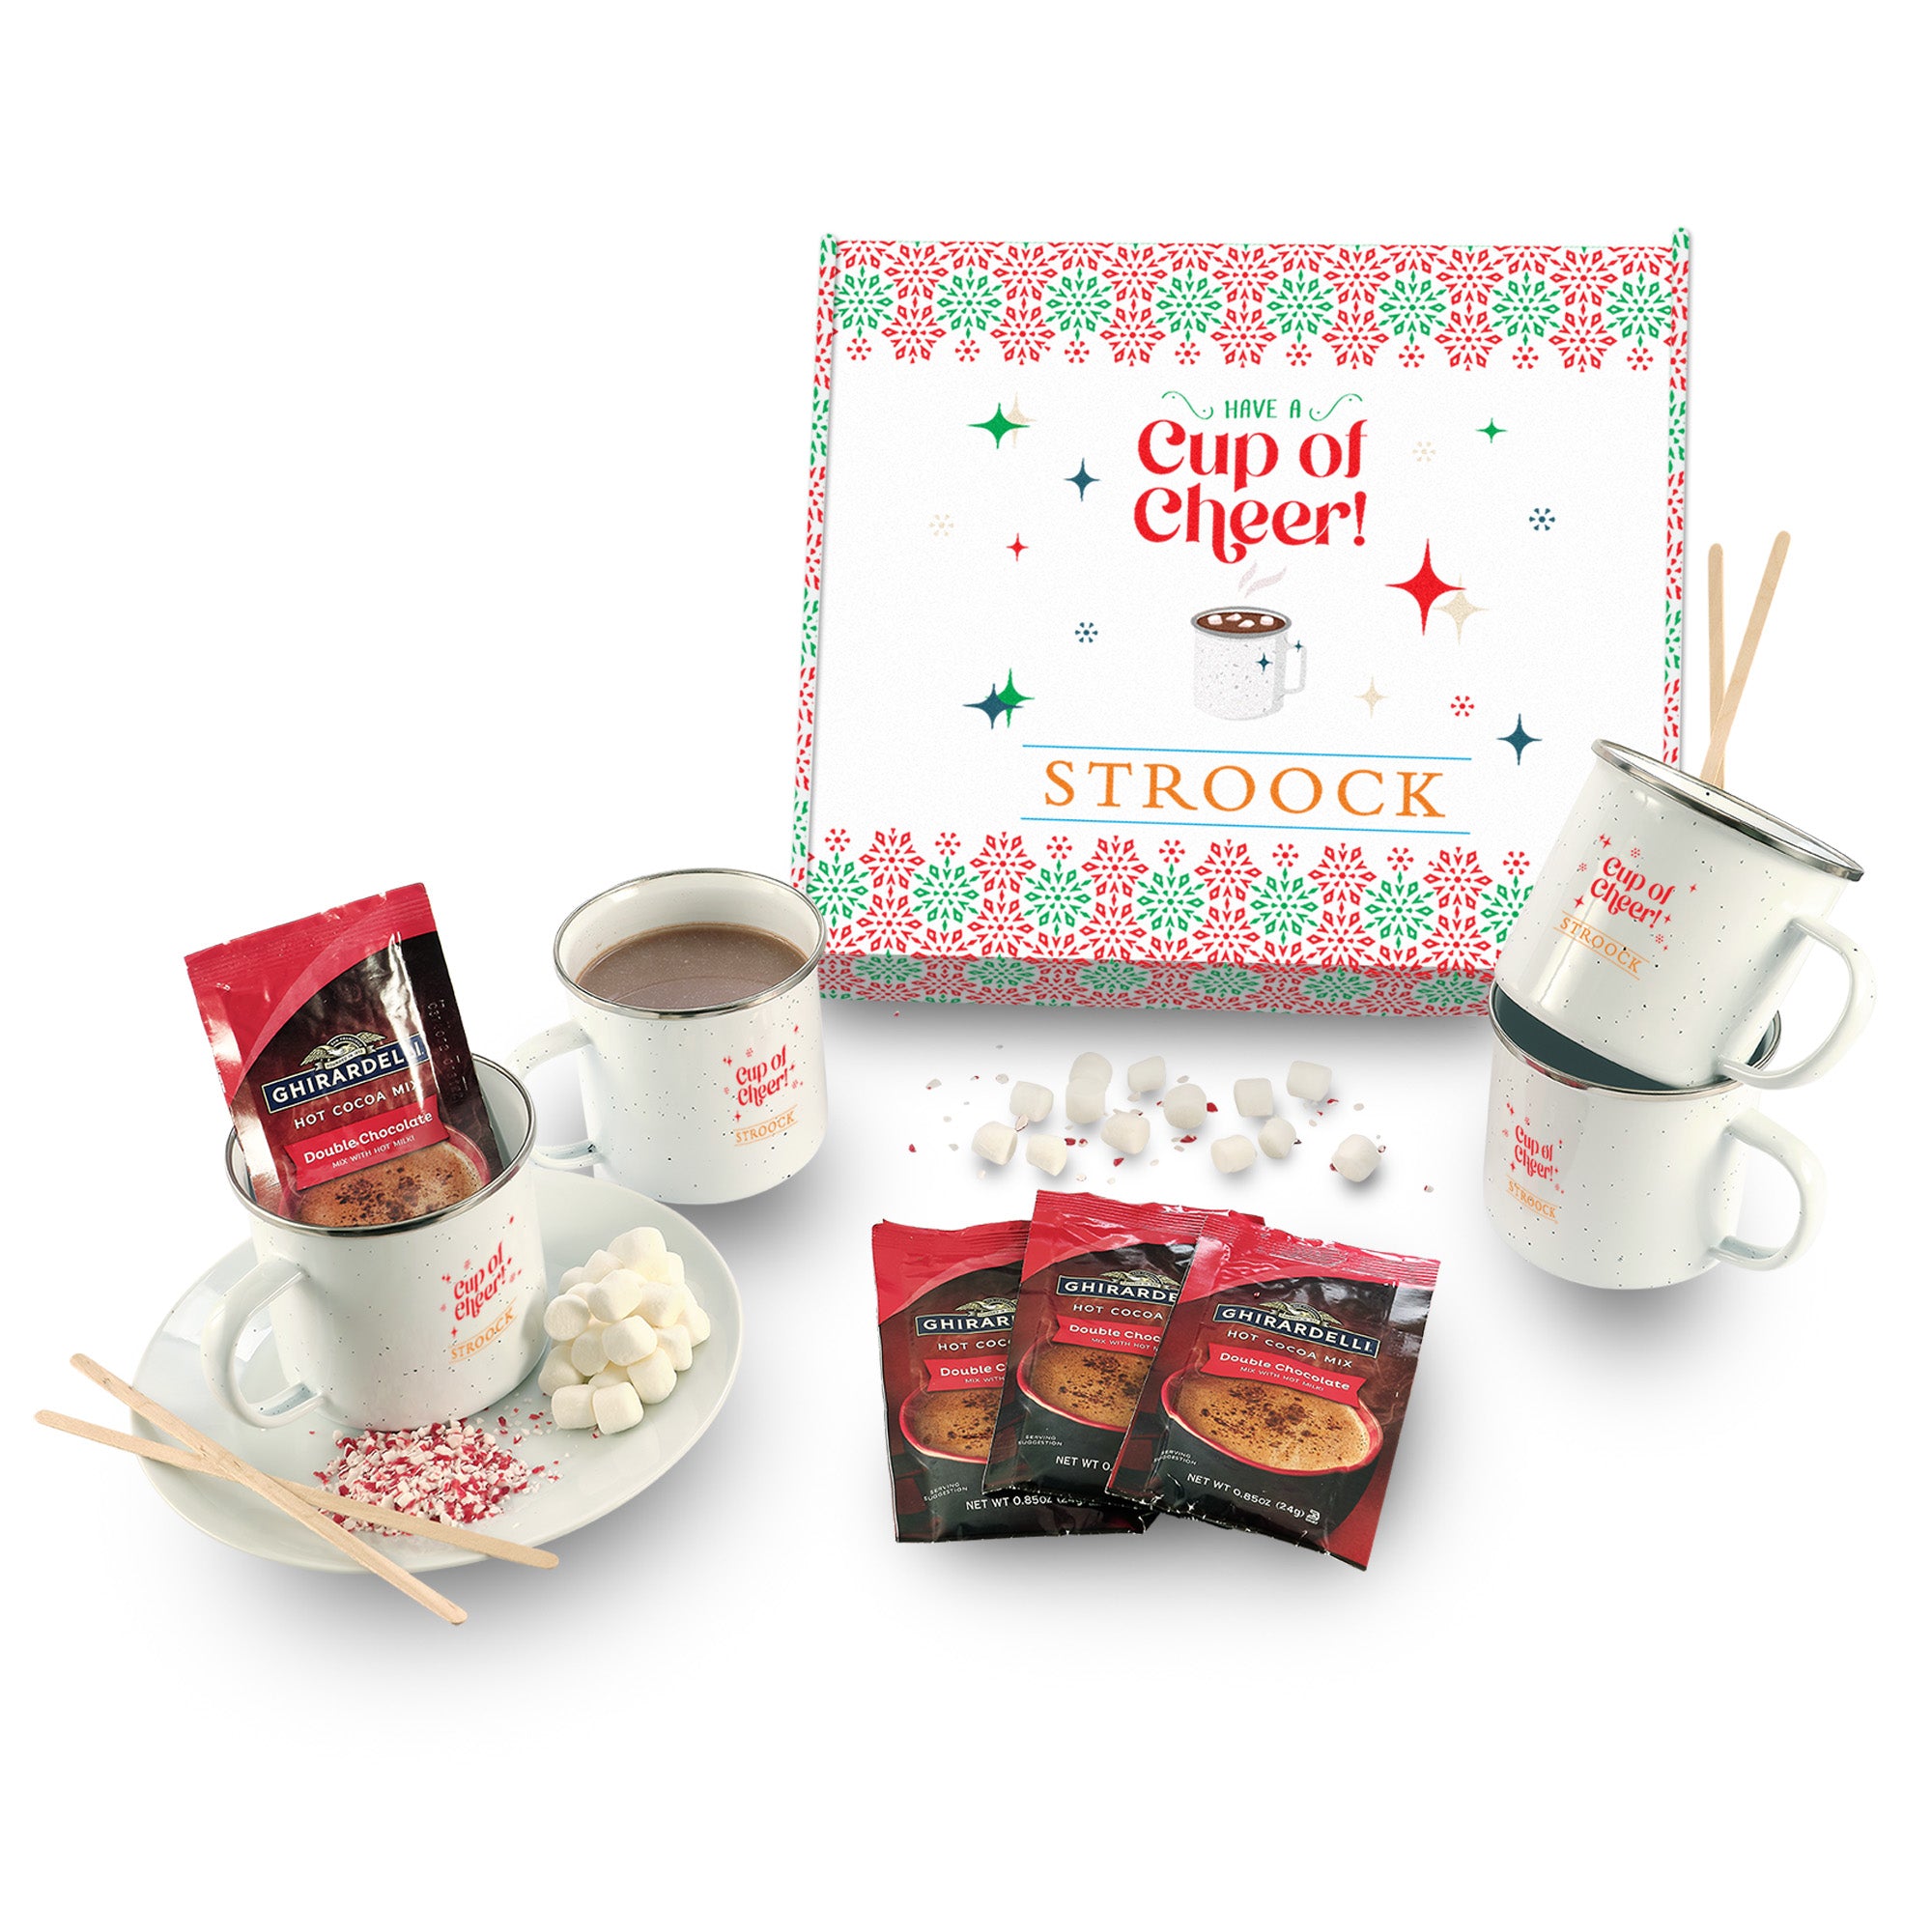 Ghirardelli Double Hot Chocolate Holiday Gift Set with Mug